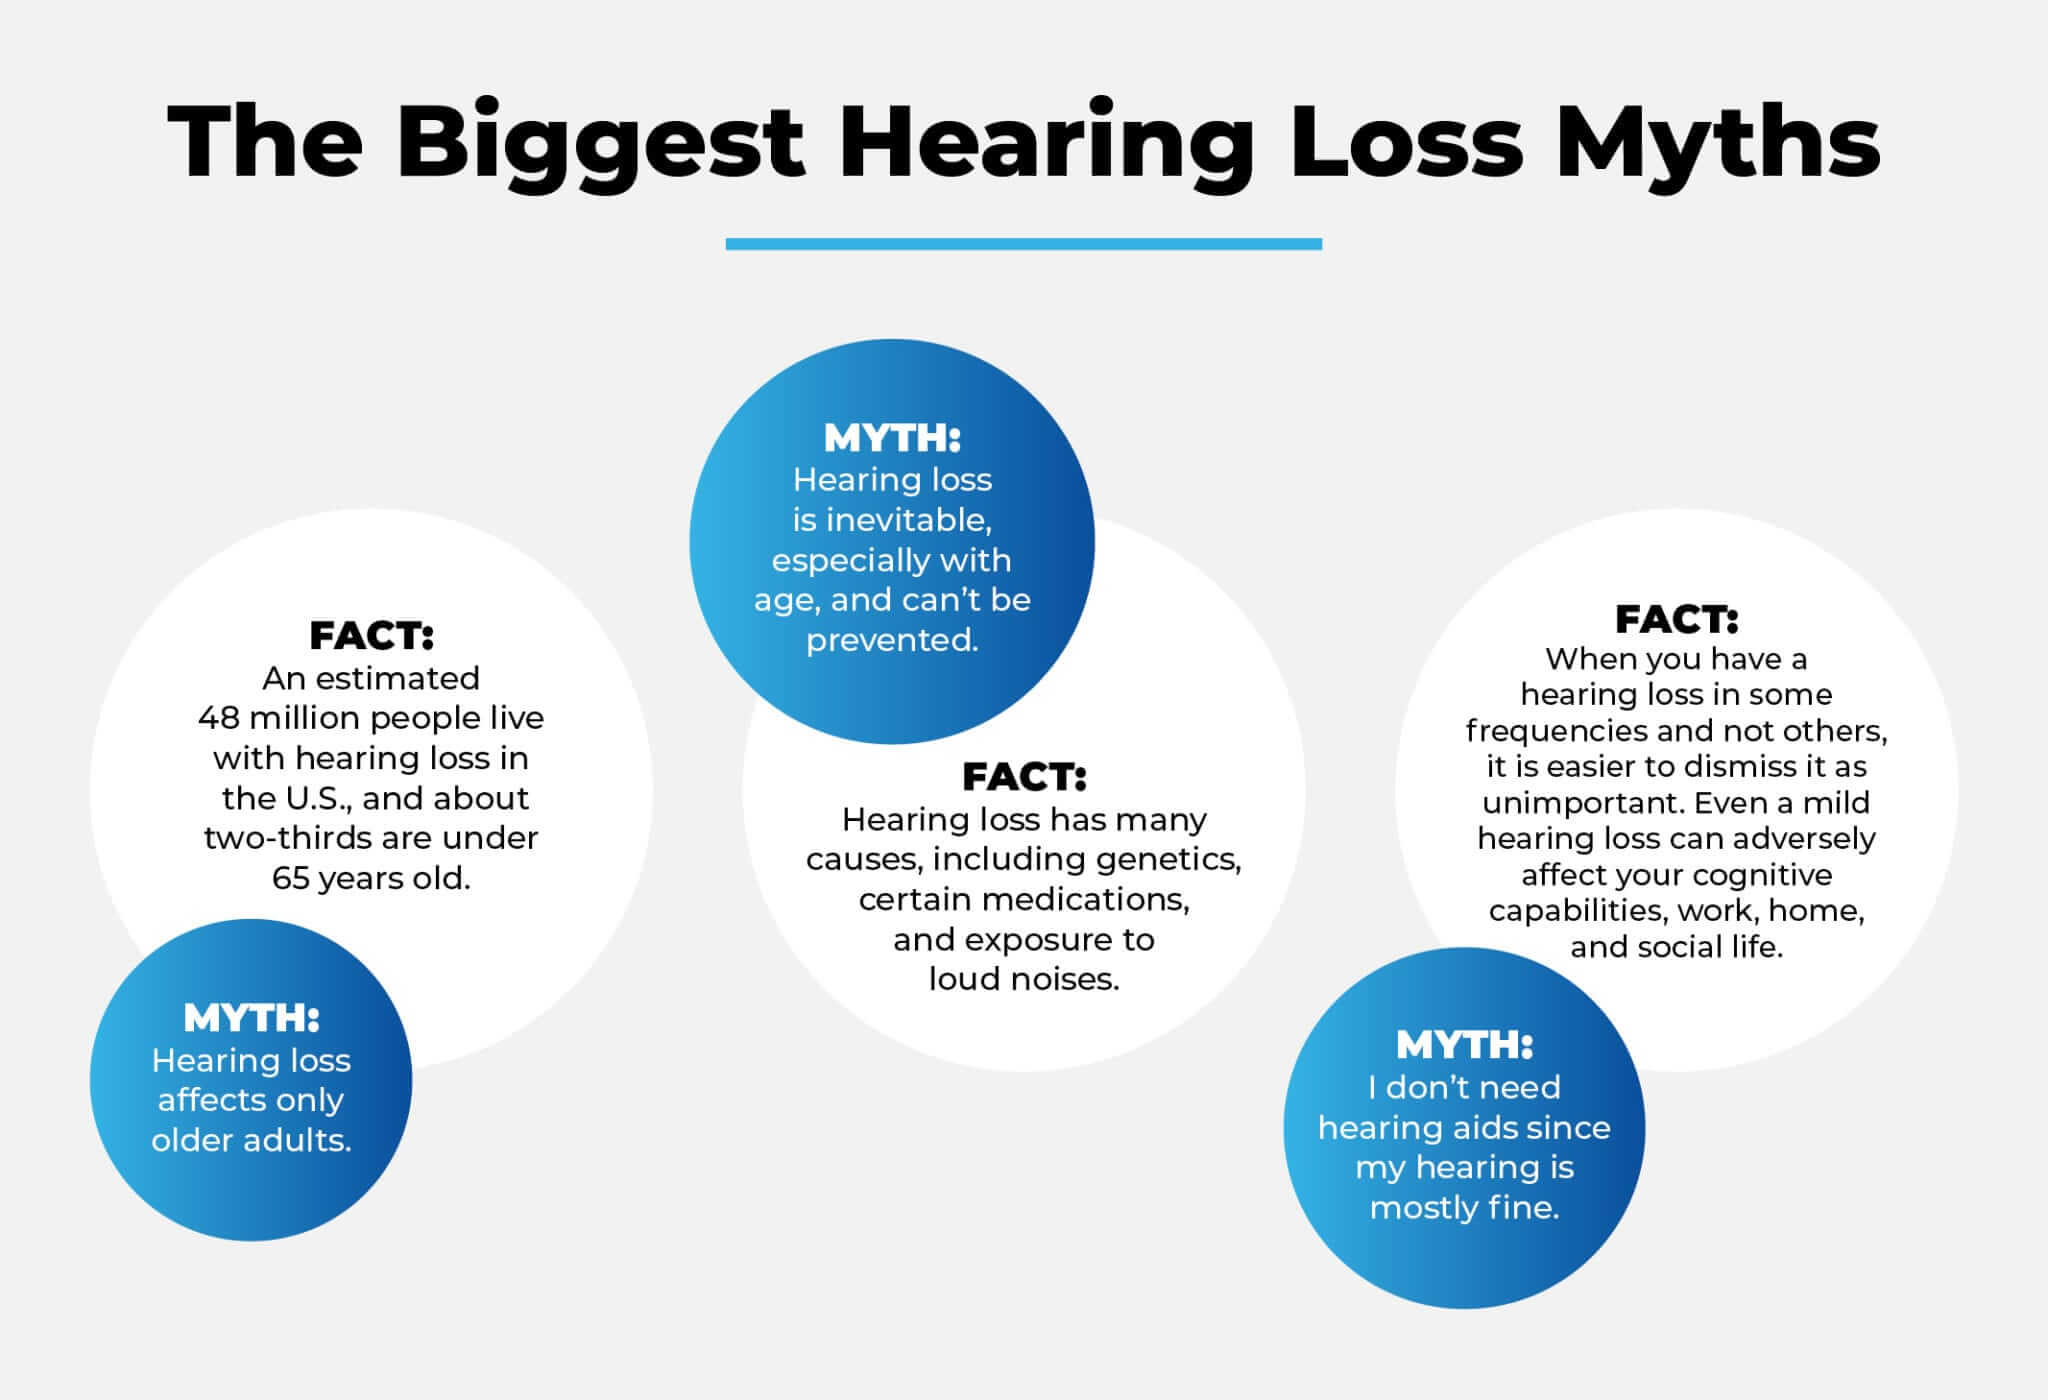 The biggest hearing loss myths